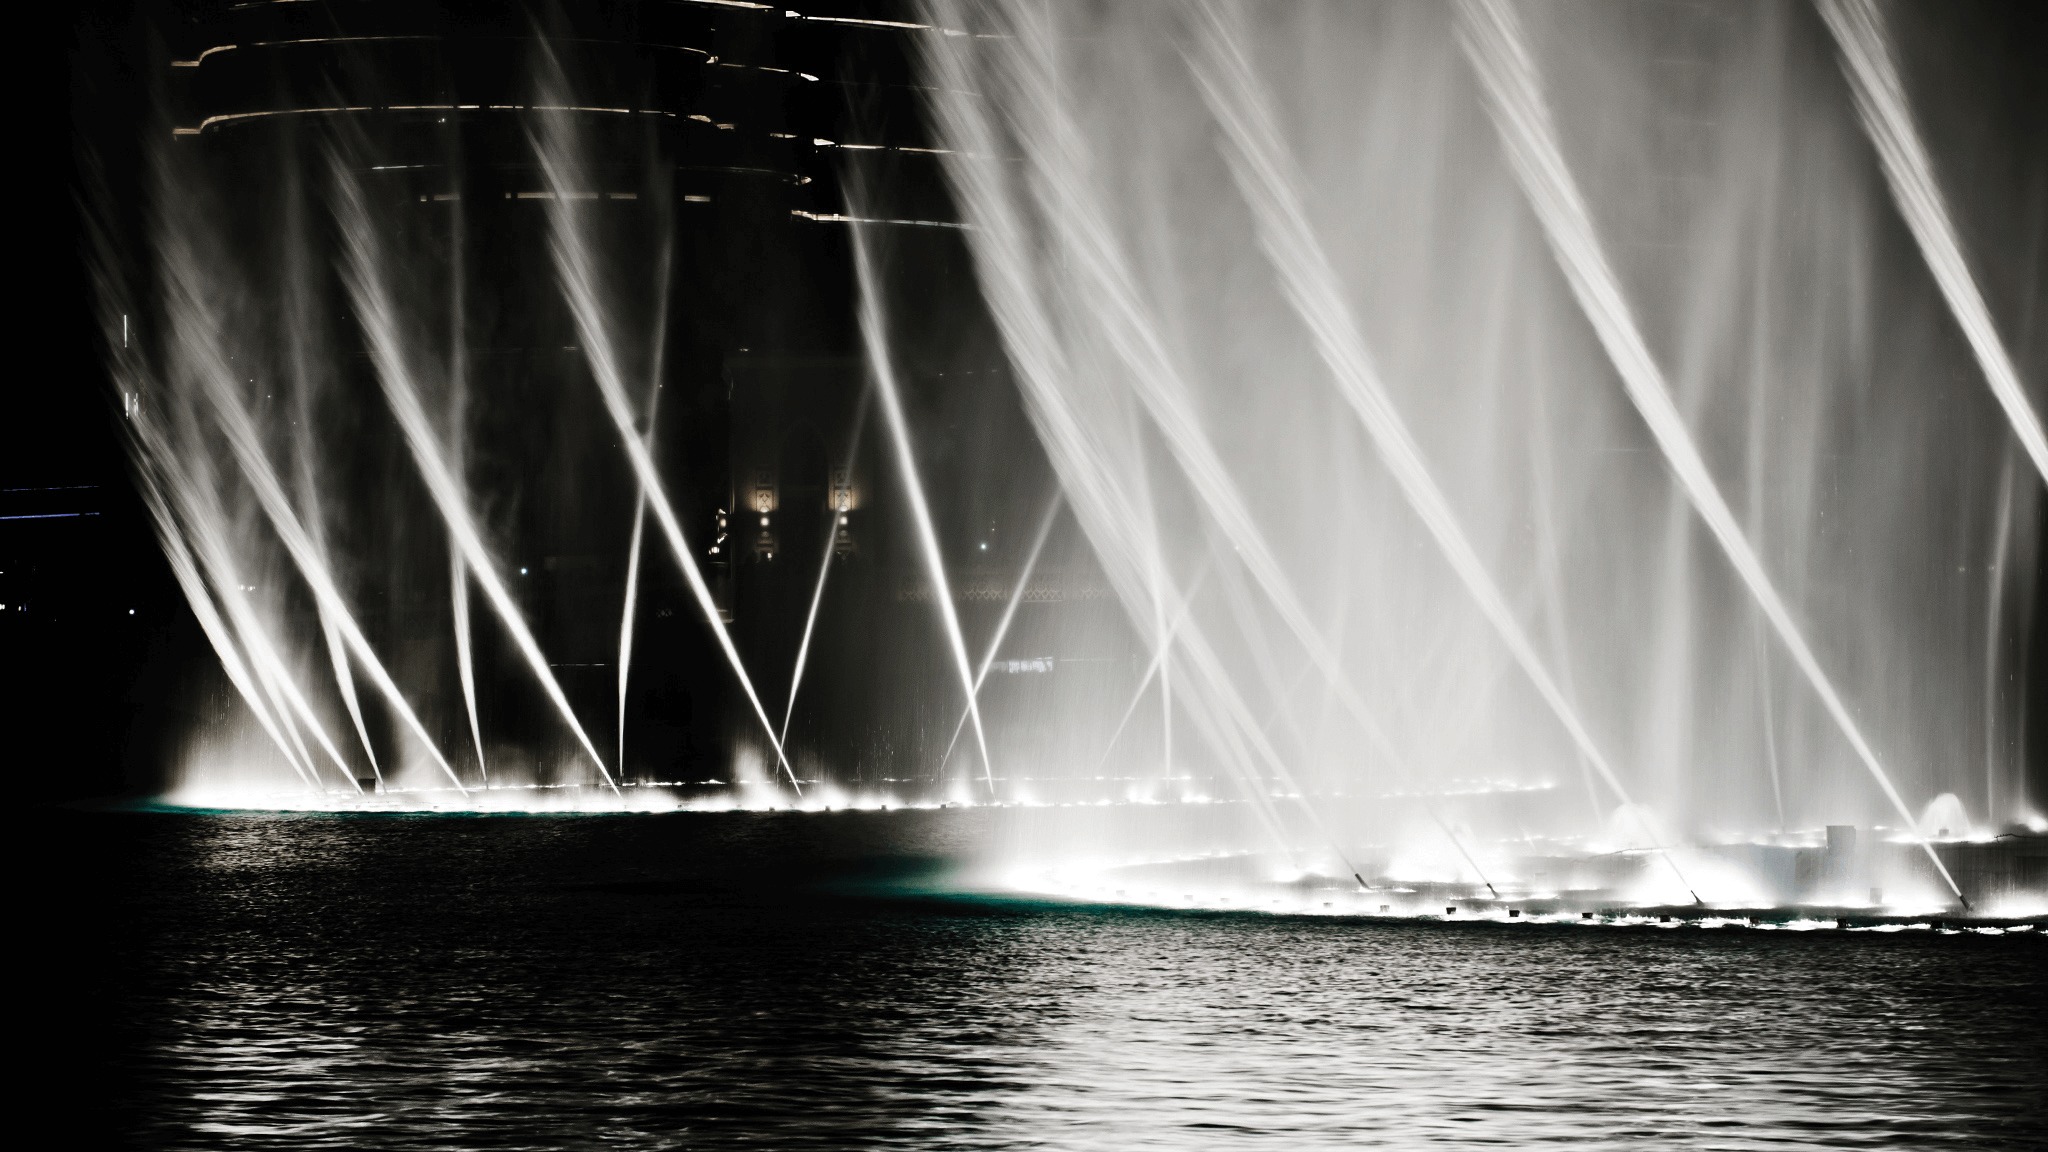 Dubai mall fountain как получить внж в чехии